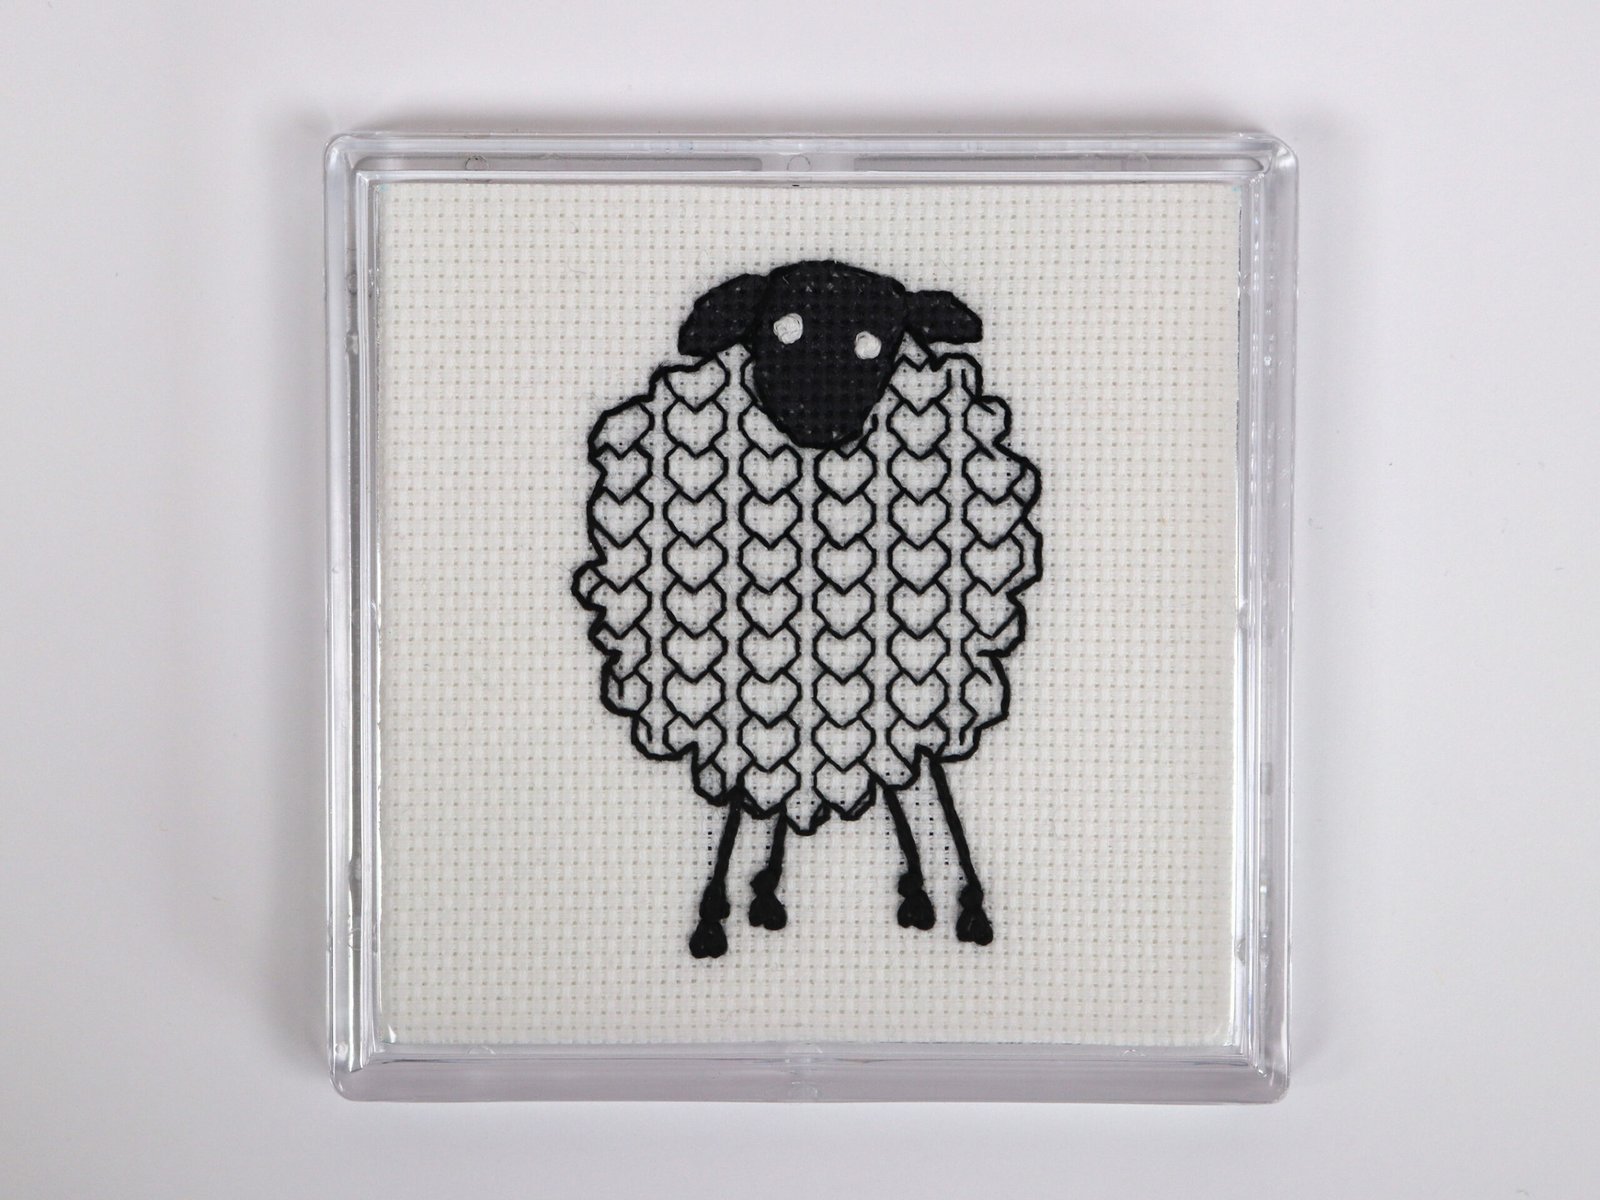 sheep hearts blackwork embroidery coaster kit